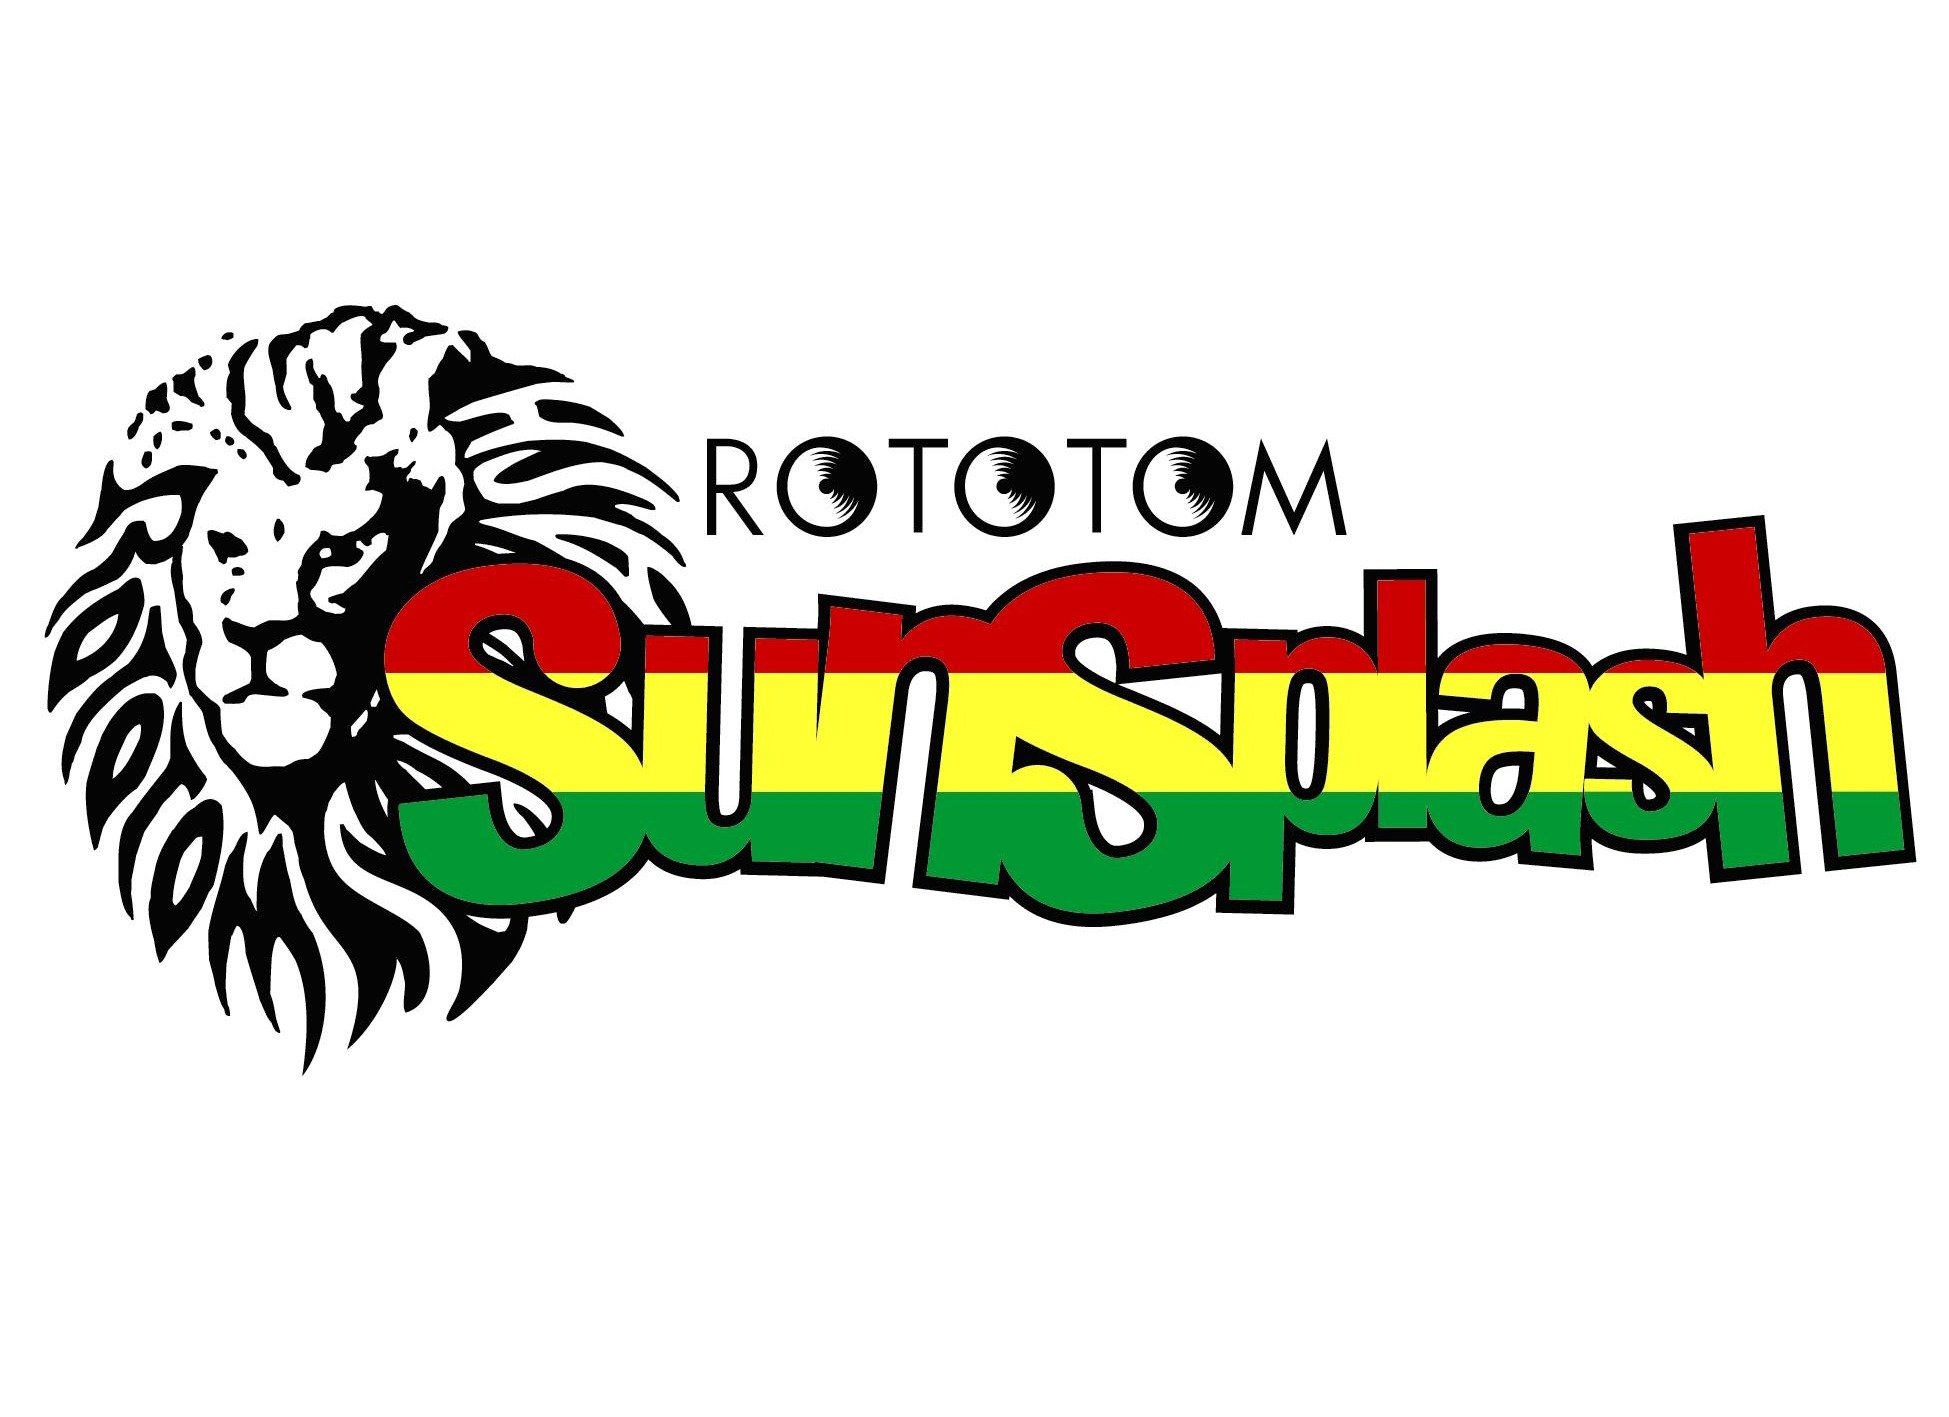 rototom sunsplash logo festival